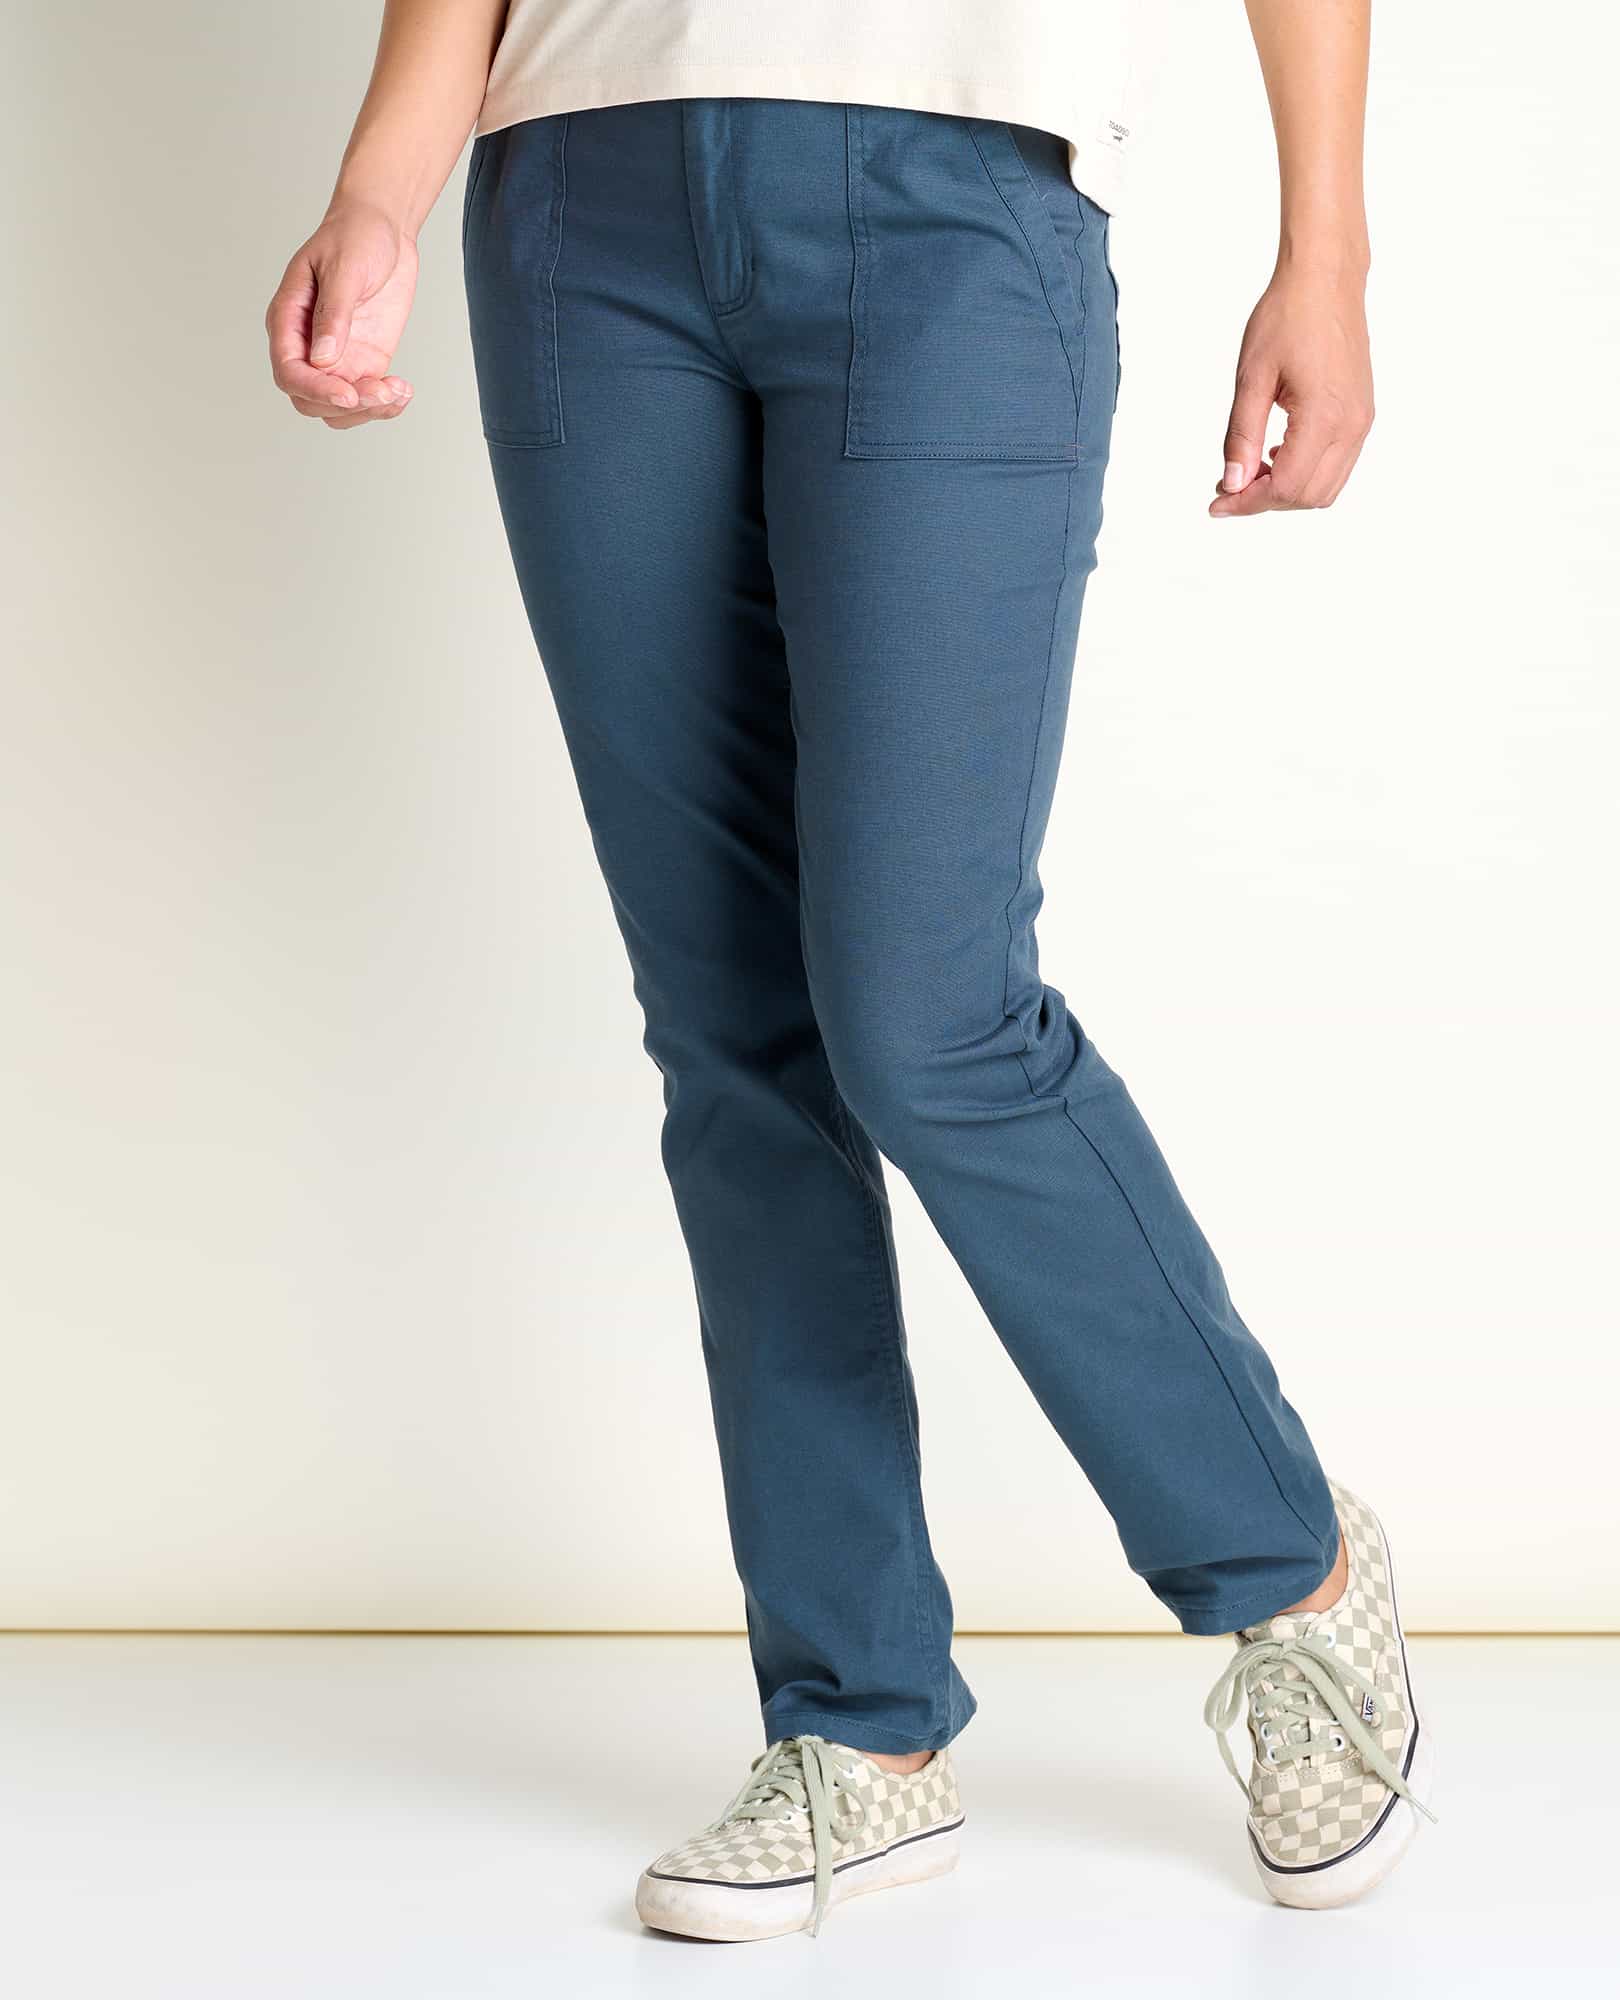 New Style & Co. Womens Cargo Capri Pants Soft Sun Size 6 Petite Pockets